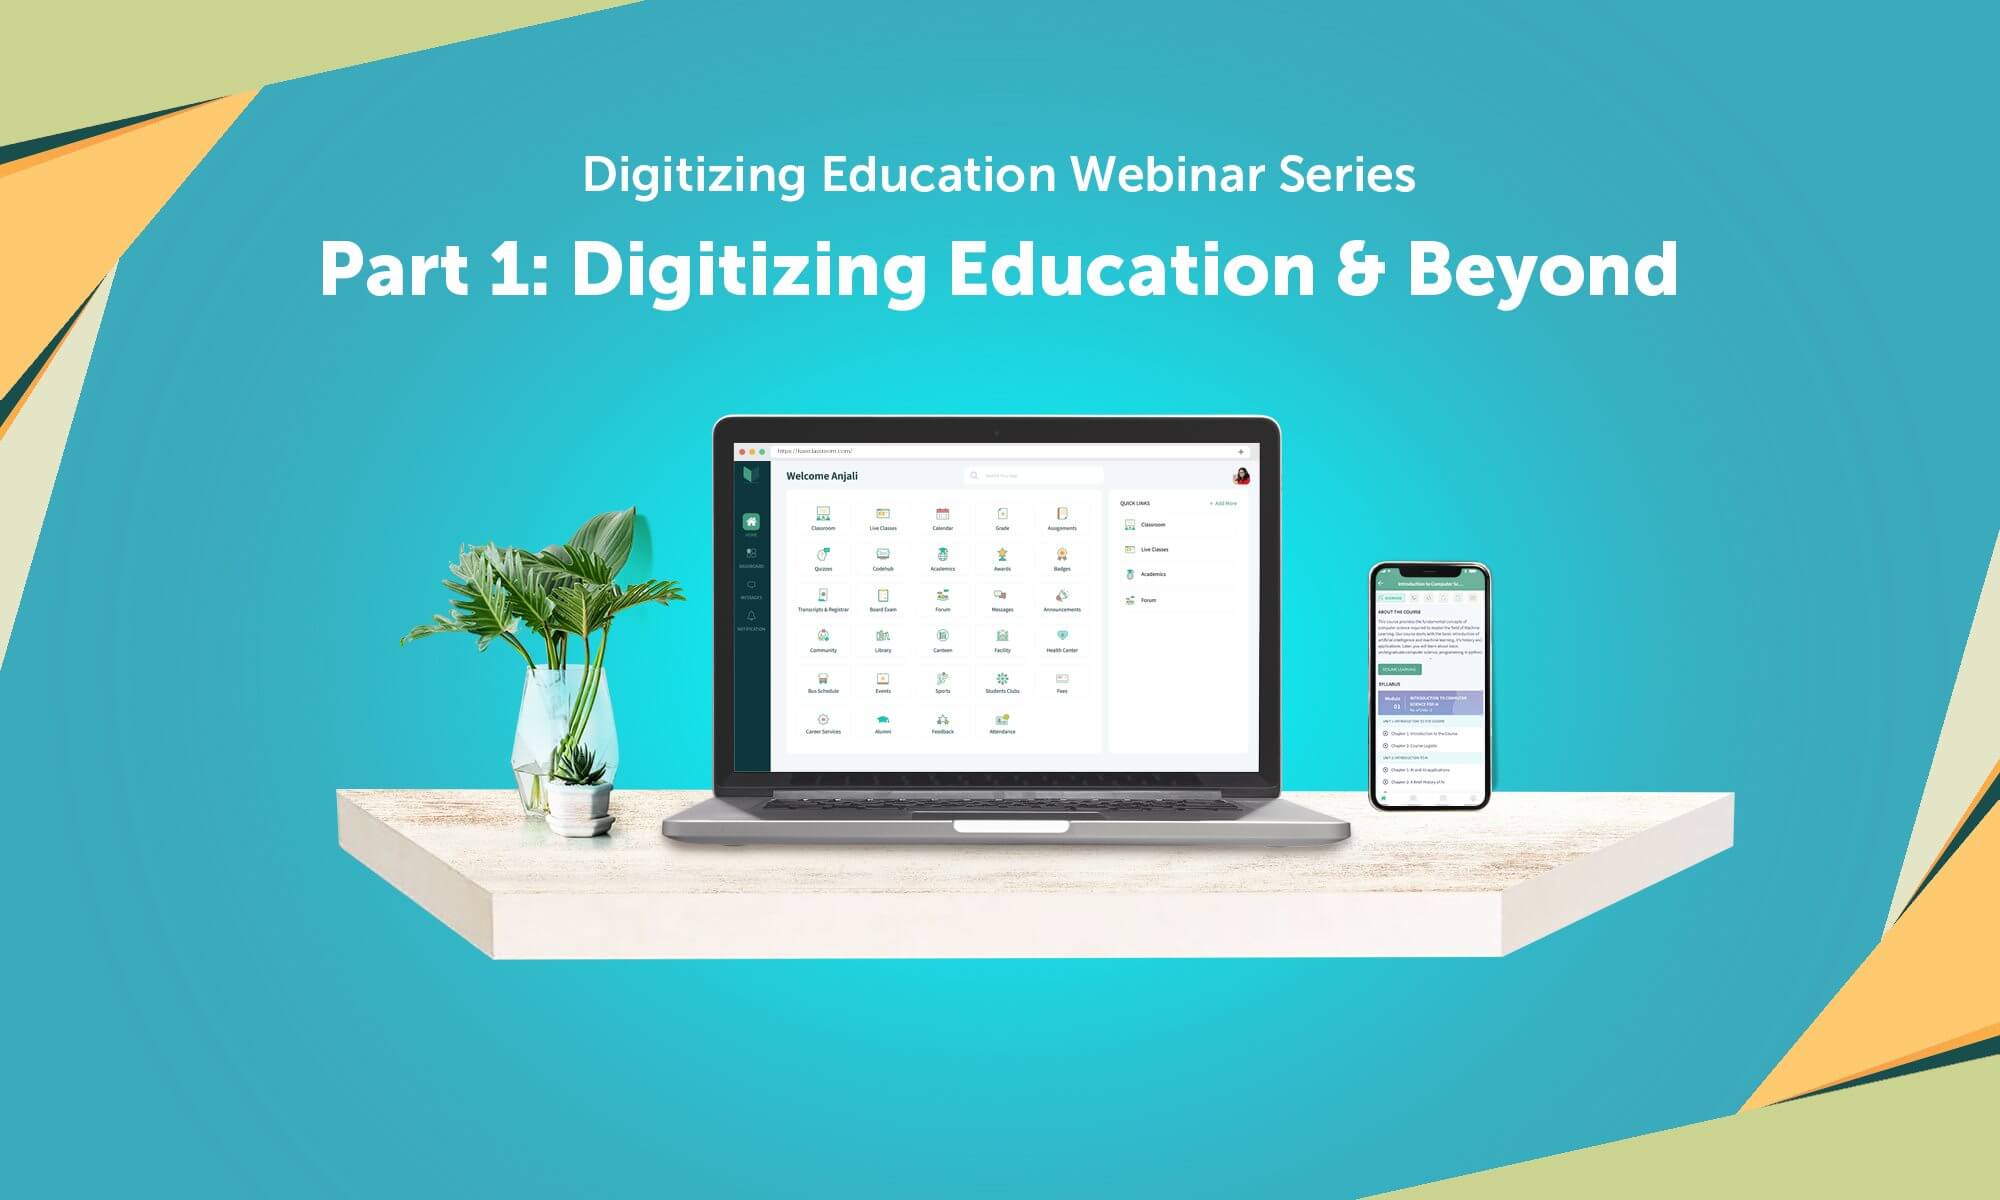 Digitizing Education & Beyond Webinar Video